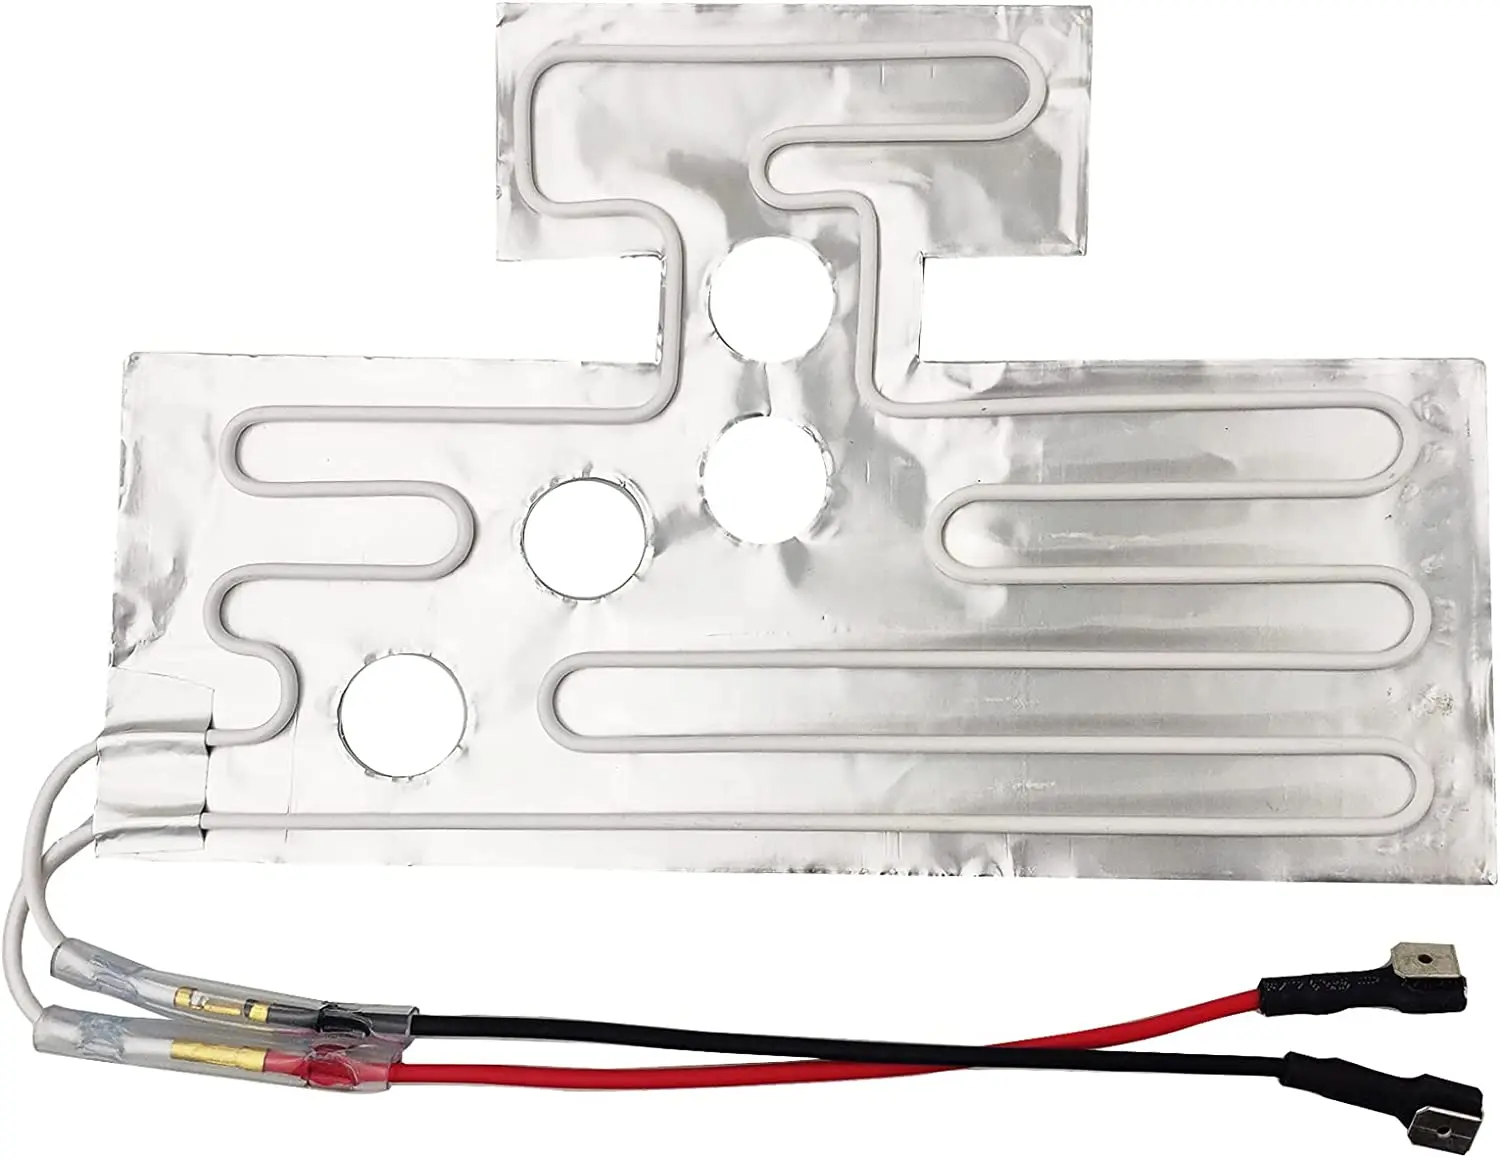 5303918301 Garage Heater Kit for Frigidaire Electrolux